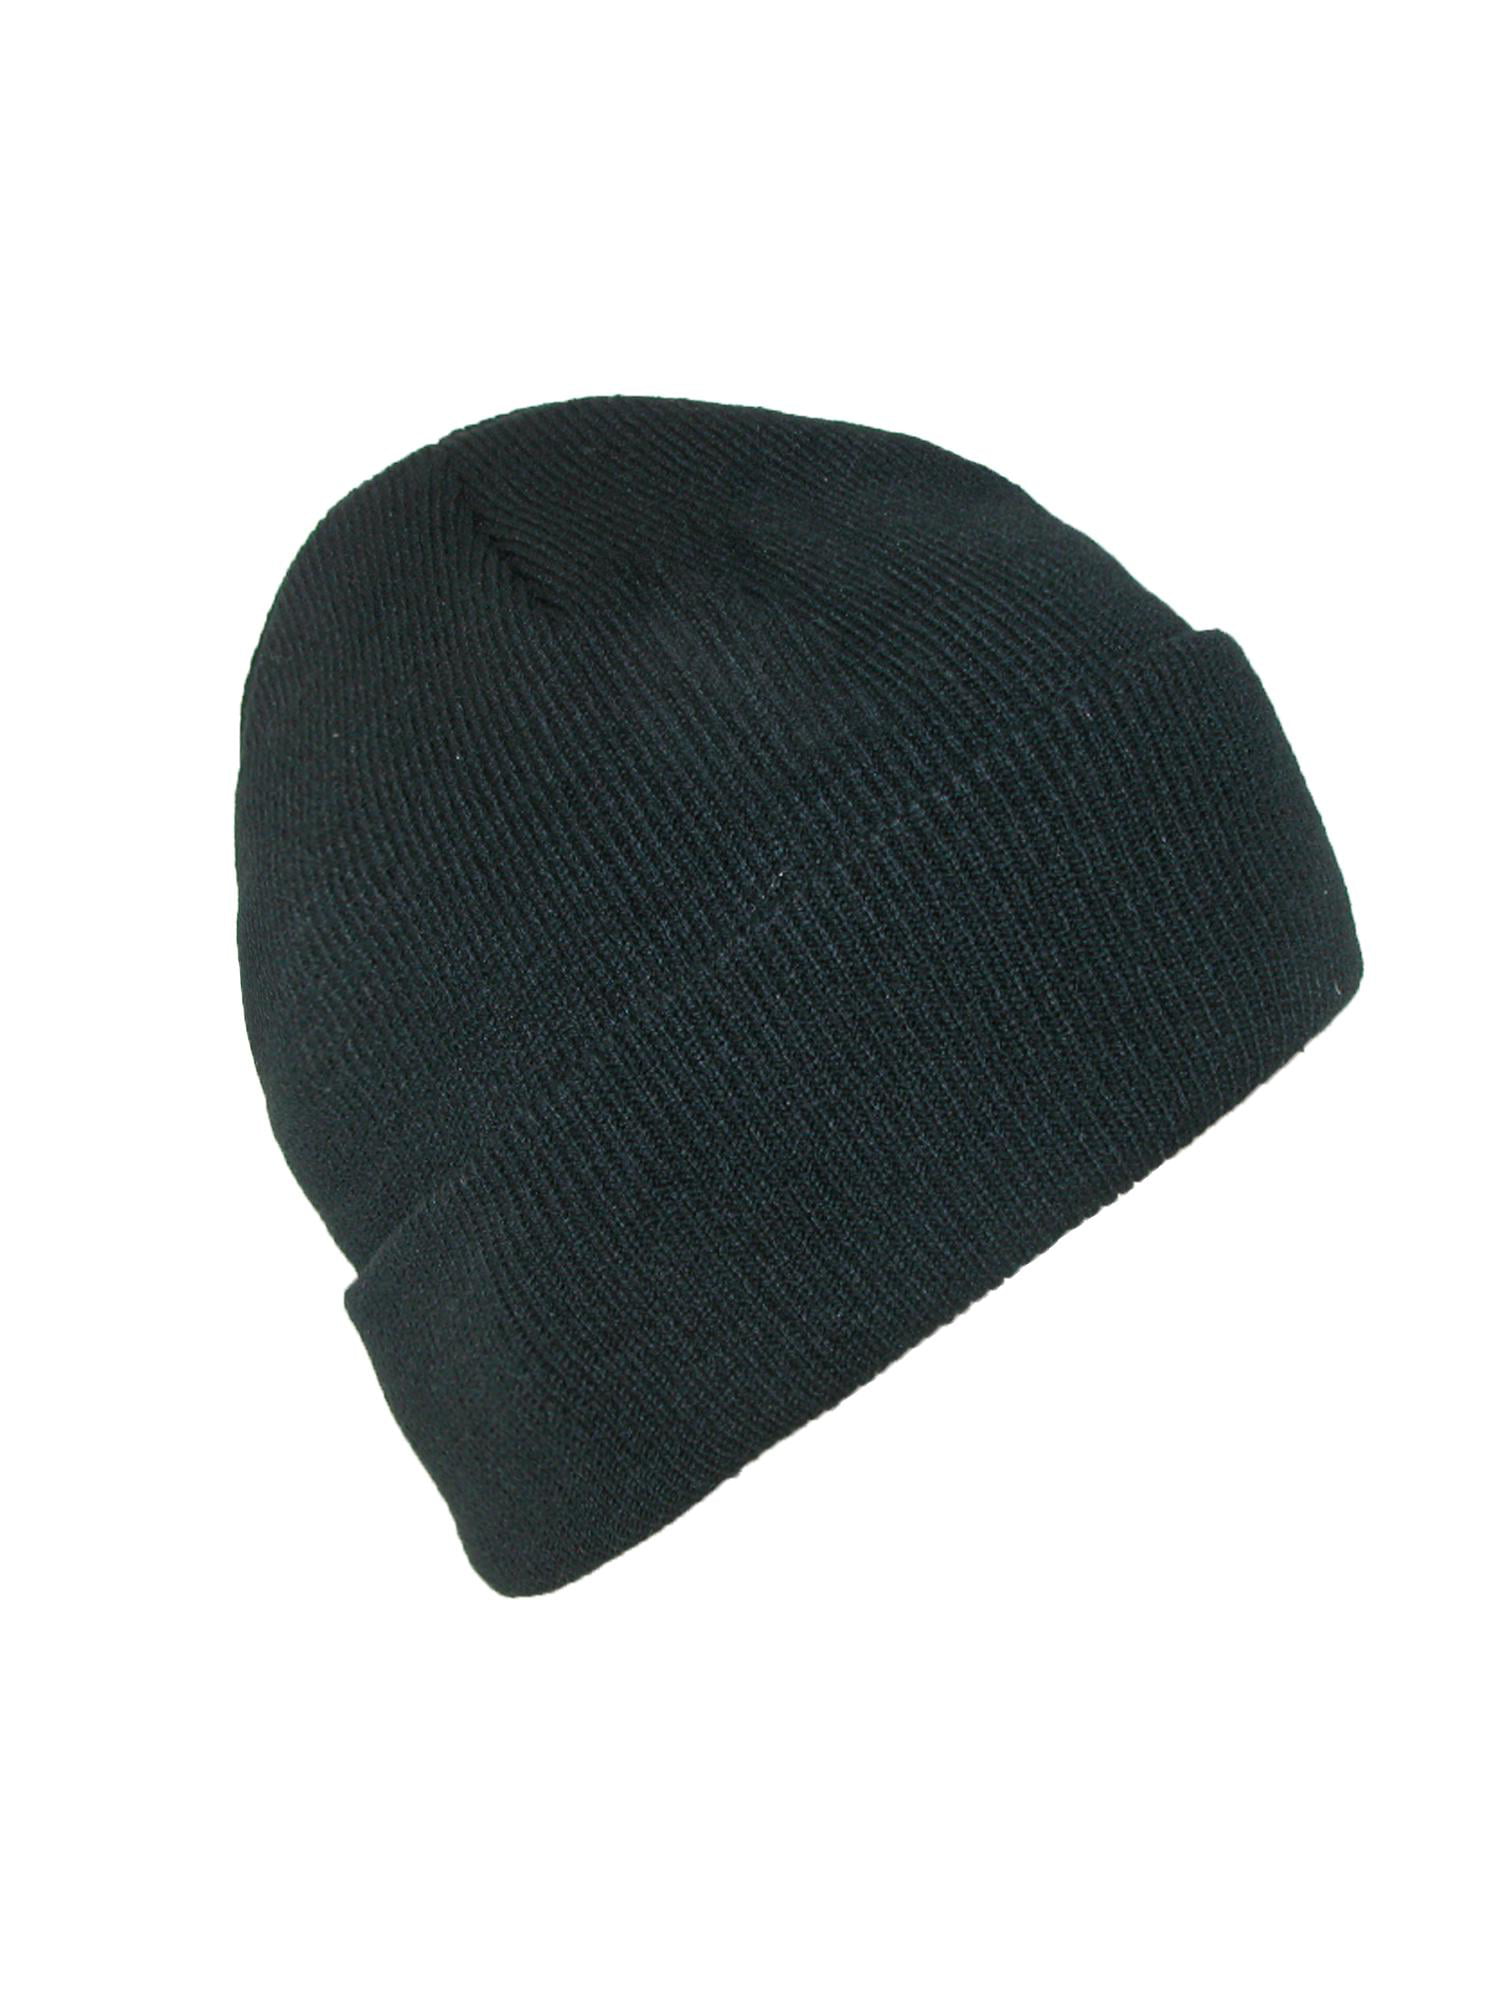 Gray & Black Tribal Short Acrylic Beanie Beanies Winter Ski Skull Cap Hat Hats 